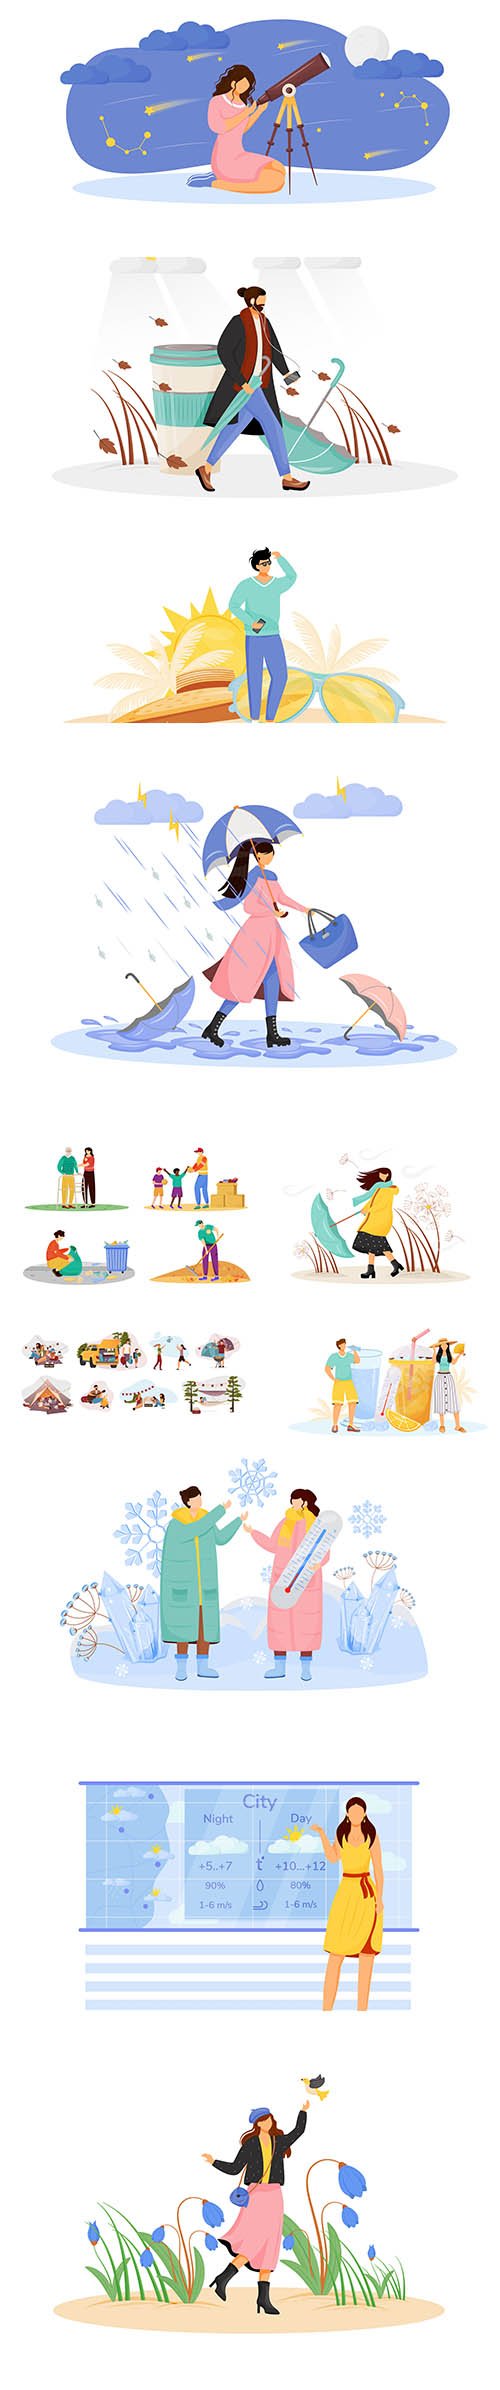 People Activities Illustrations